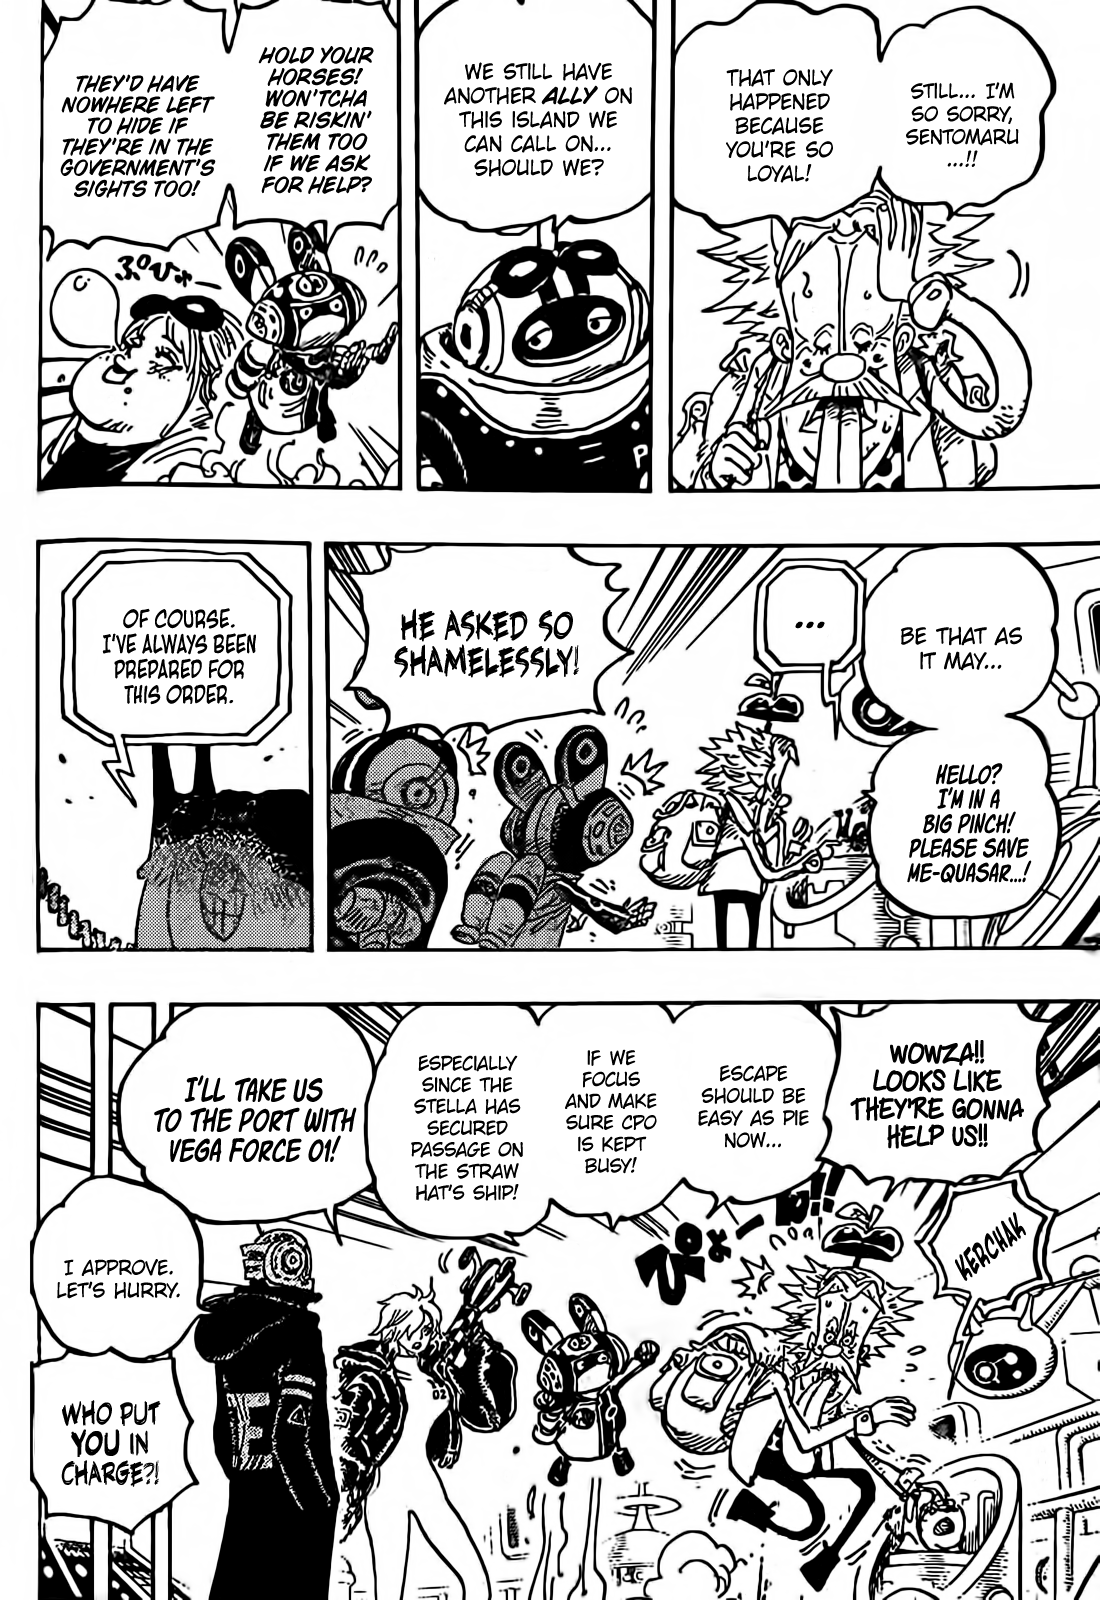 One Piece chapter 1071 spoilers reveal Joy Boy, Egghead, and Kizaru in a  jumble